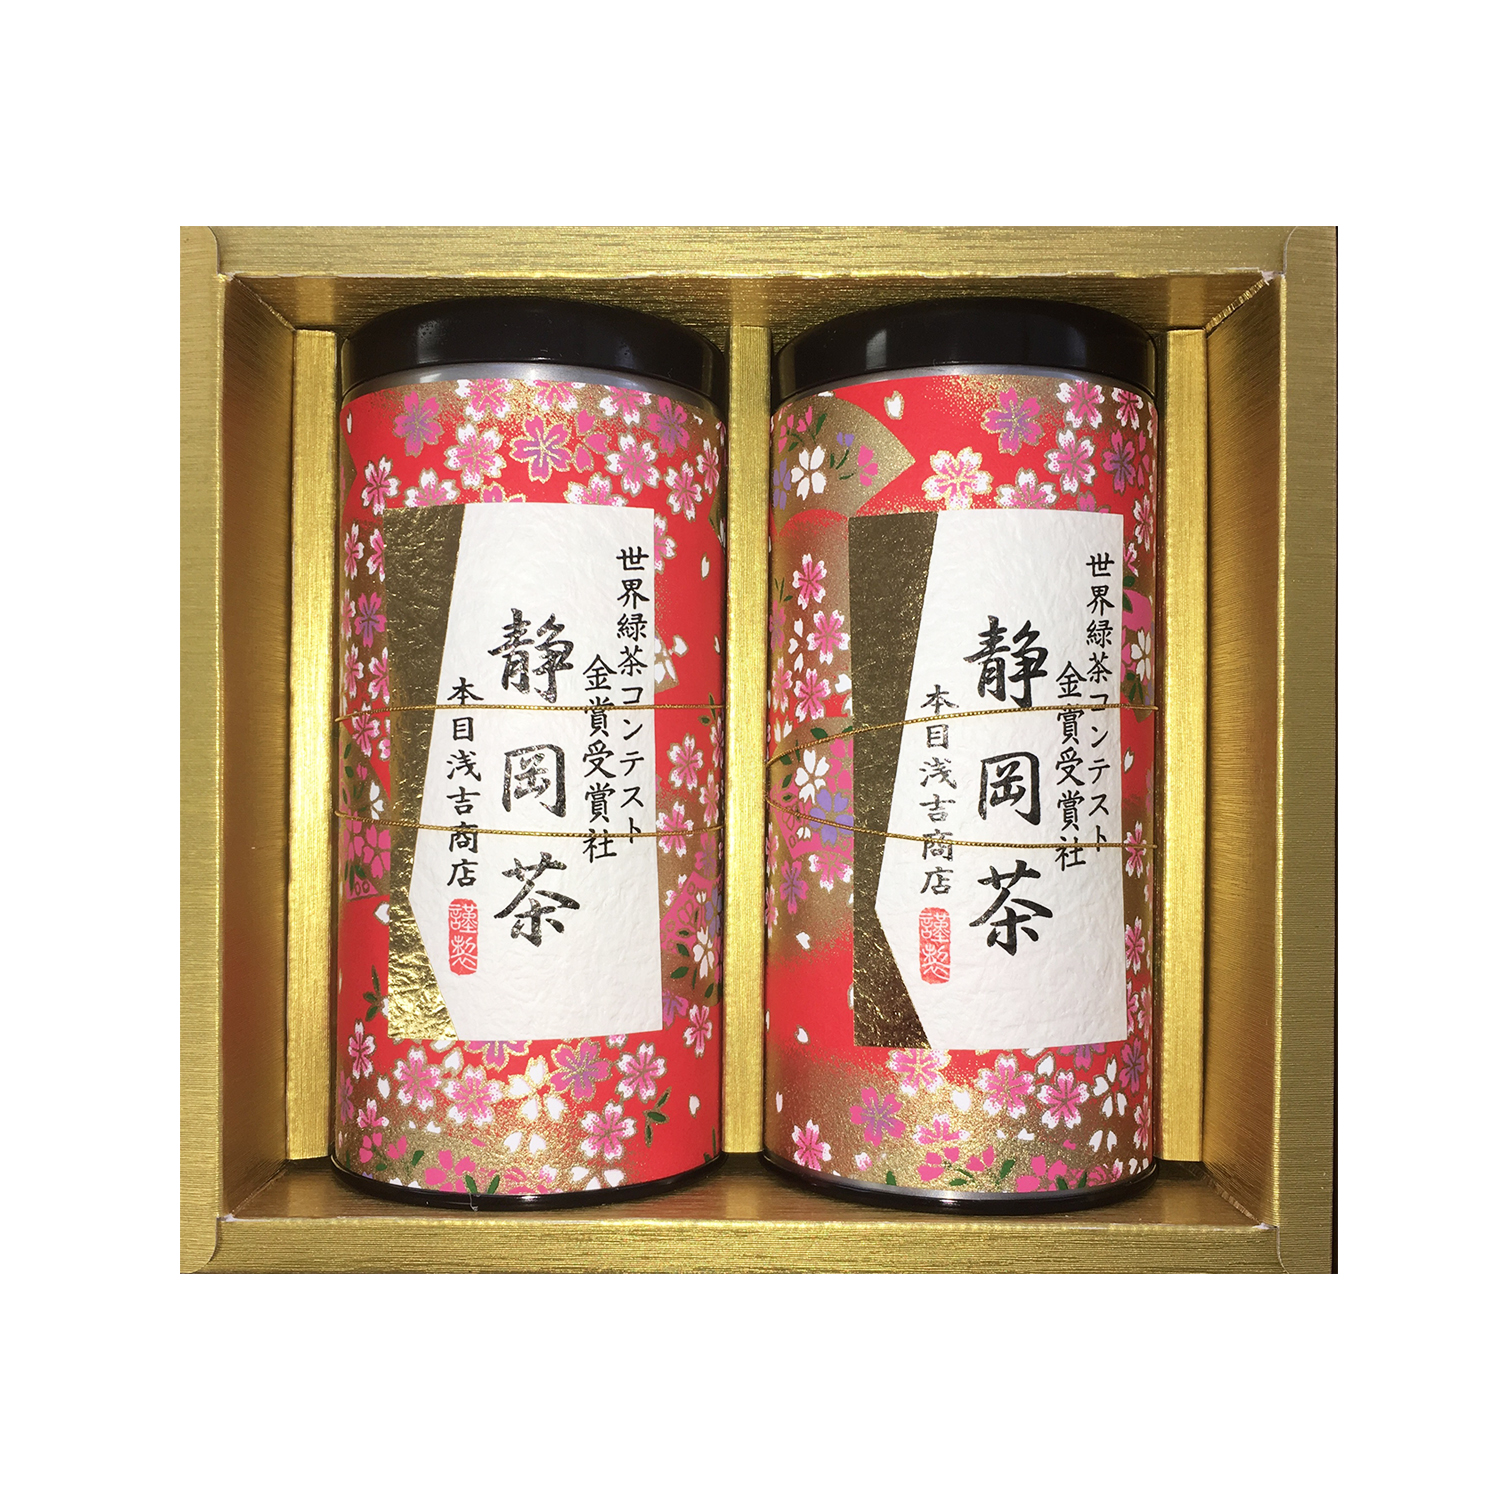 Japanese tea Sencha in Japanese traditional handmade paper can.